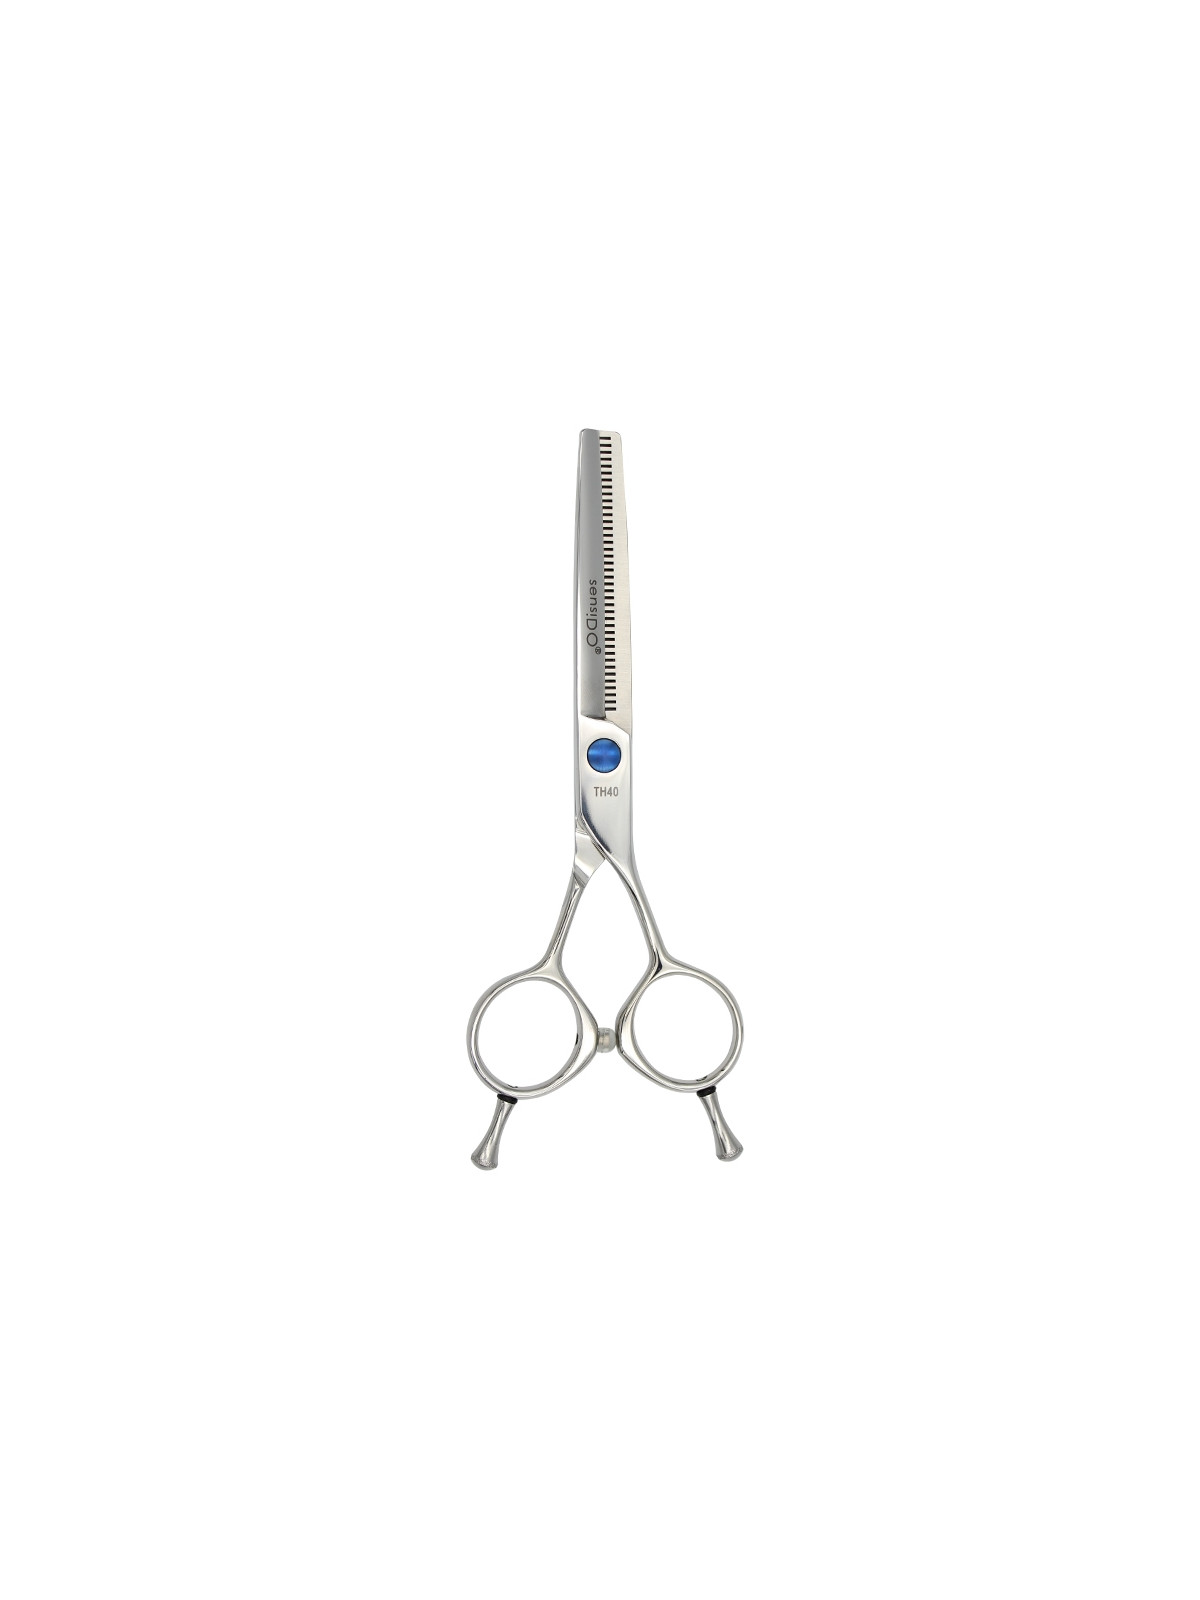 SensiDO TH thinning scissors